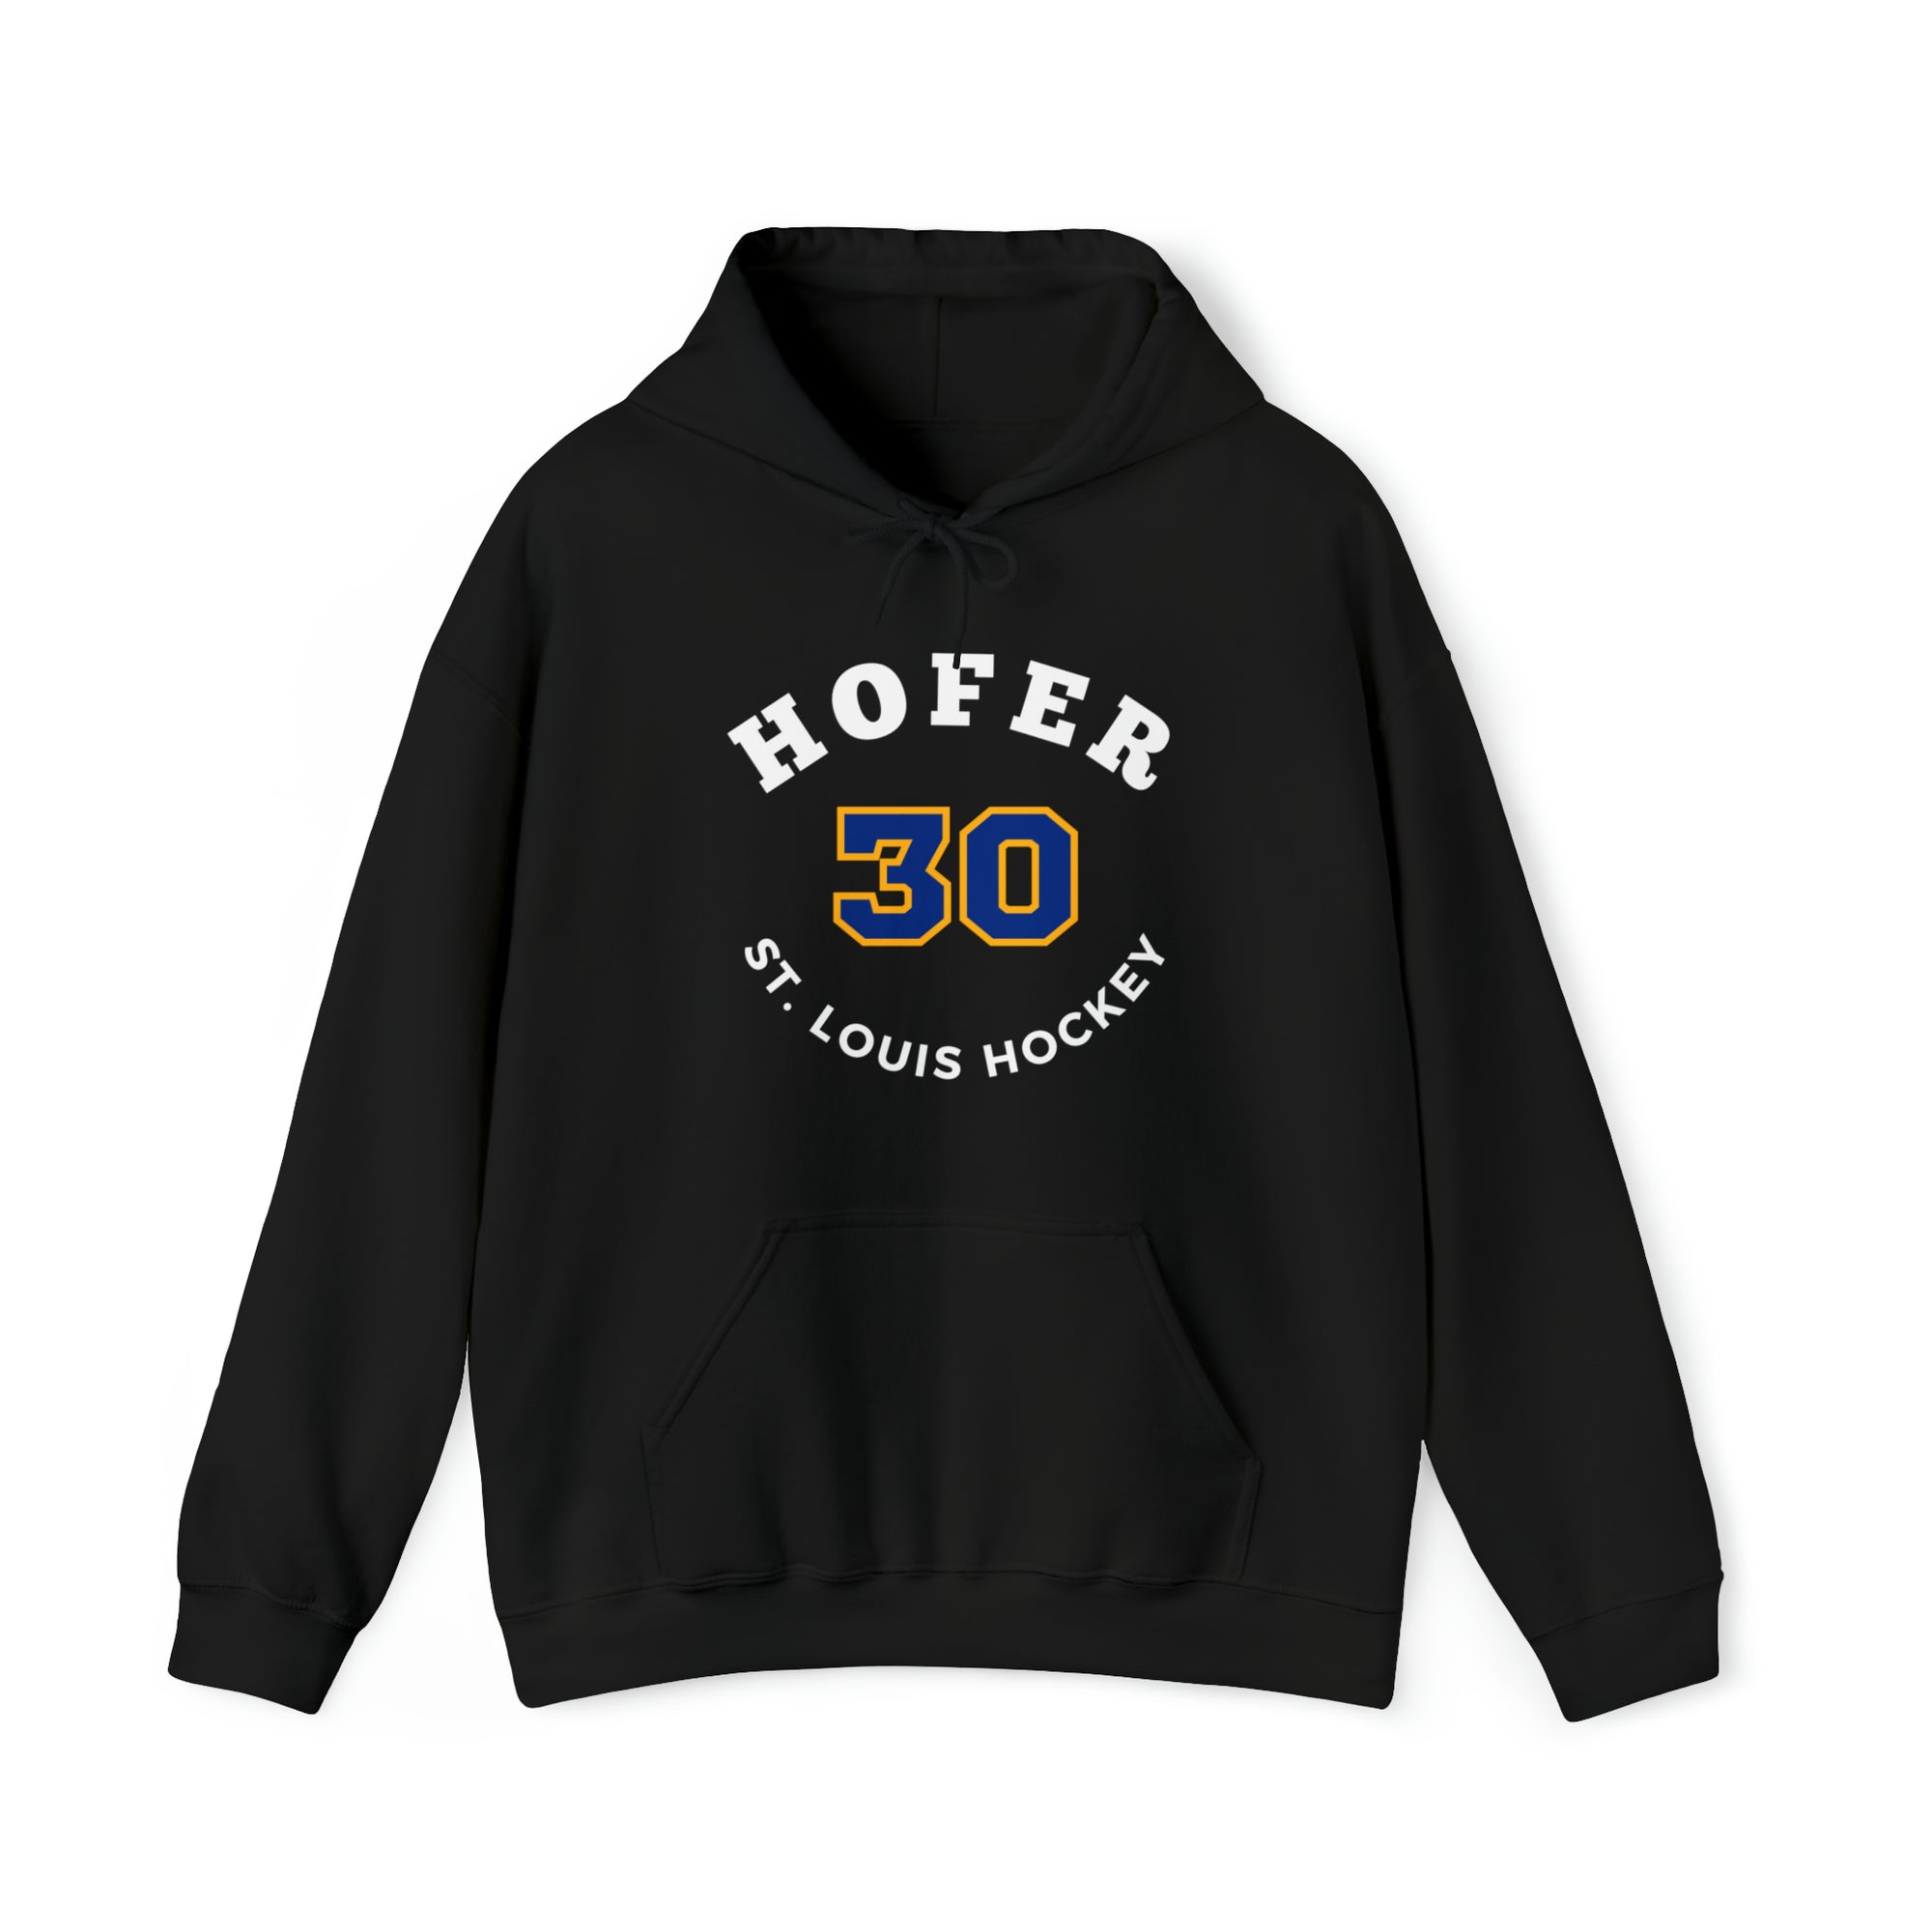 Hofer 30 St. Louis Hockey Number Arch Design Unisex Hooded Sweatshirt